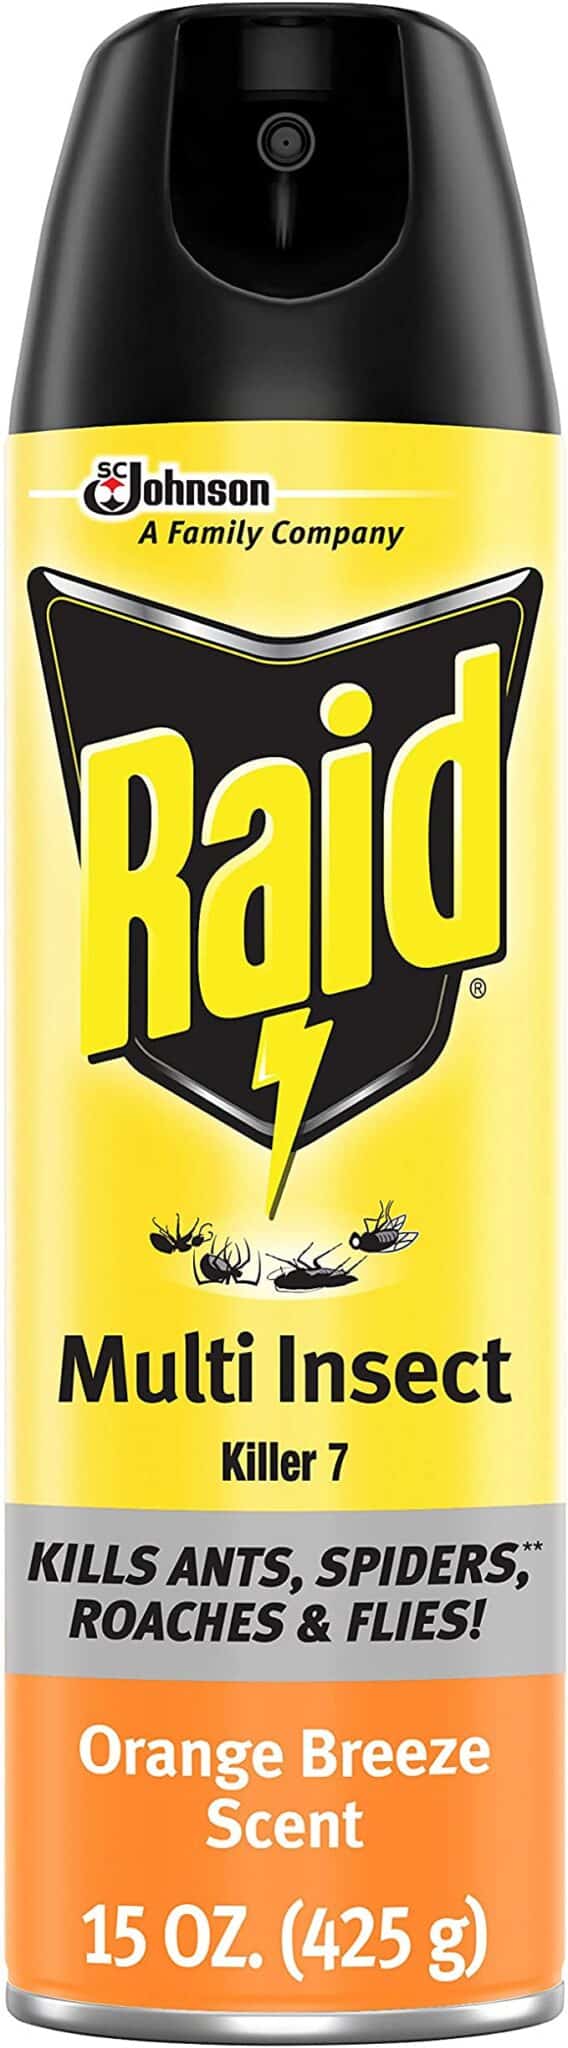 Raid Multi Insect Killer Logo